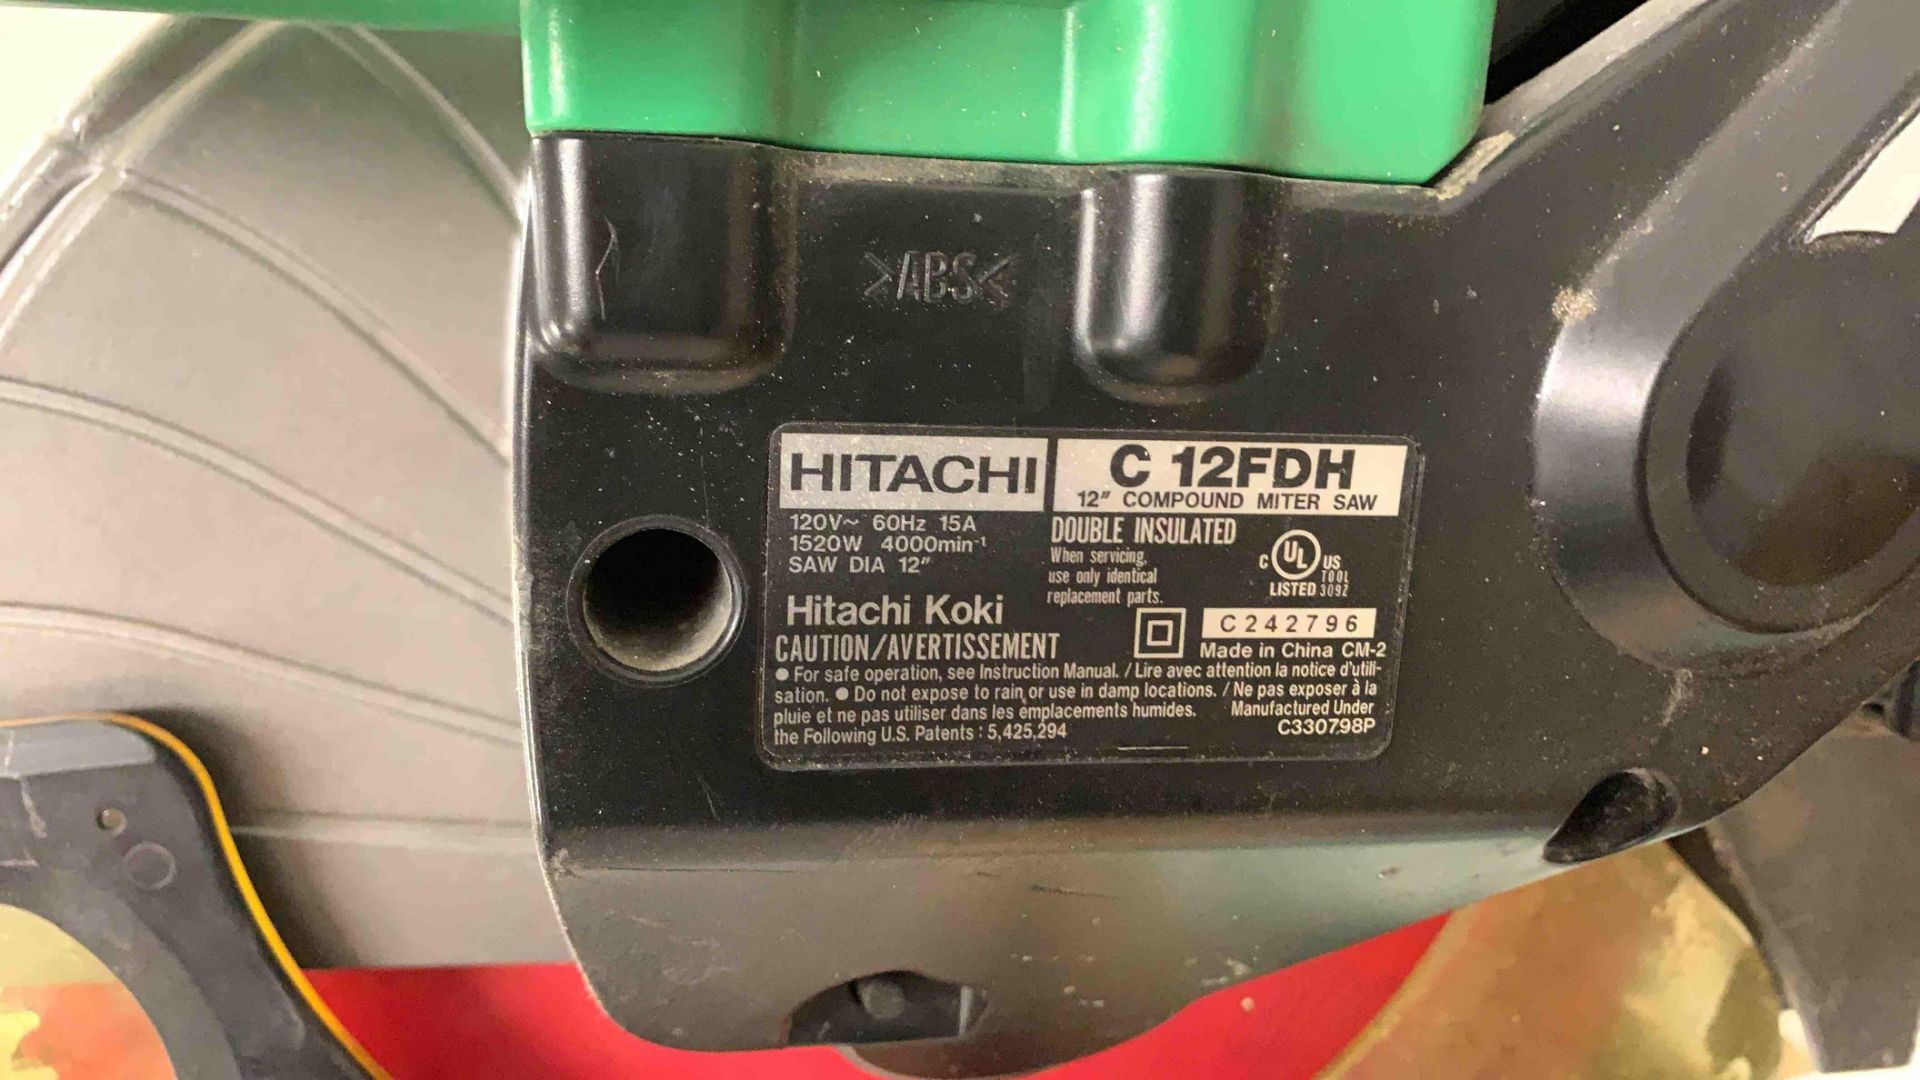 HITACHI C12FDH 12” COMPOUND MITER SAW - Image 6 of 6